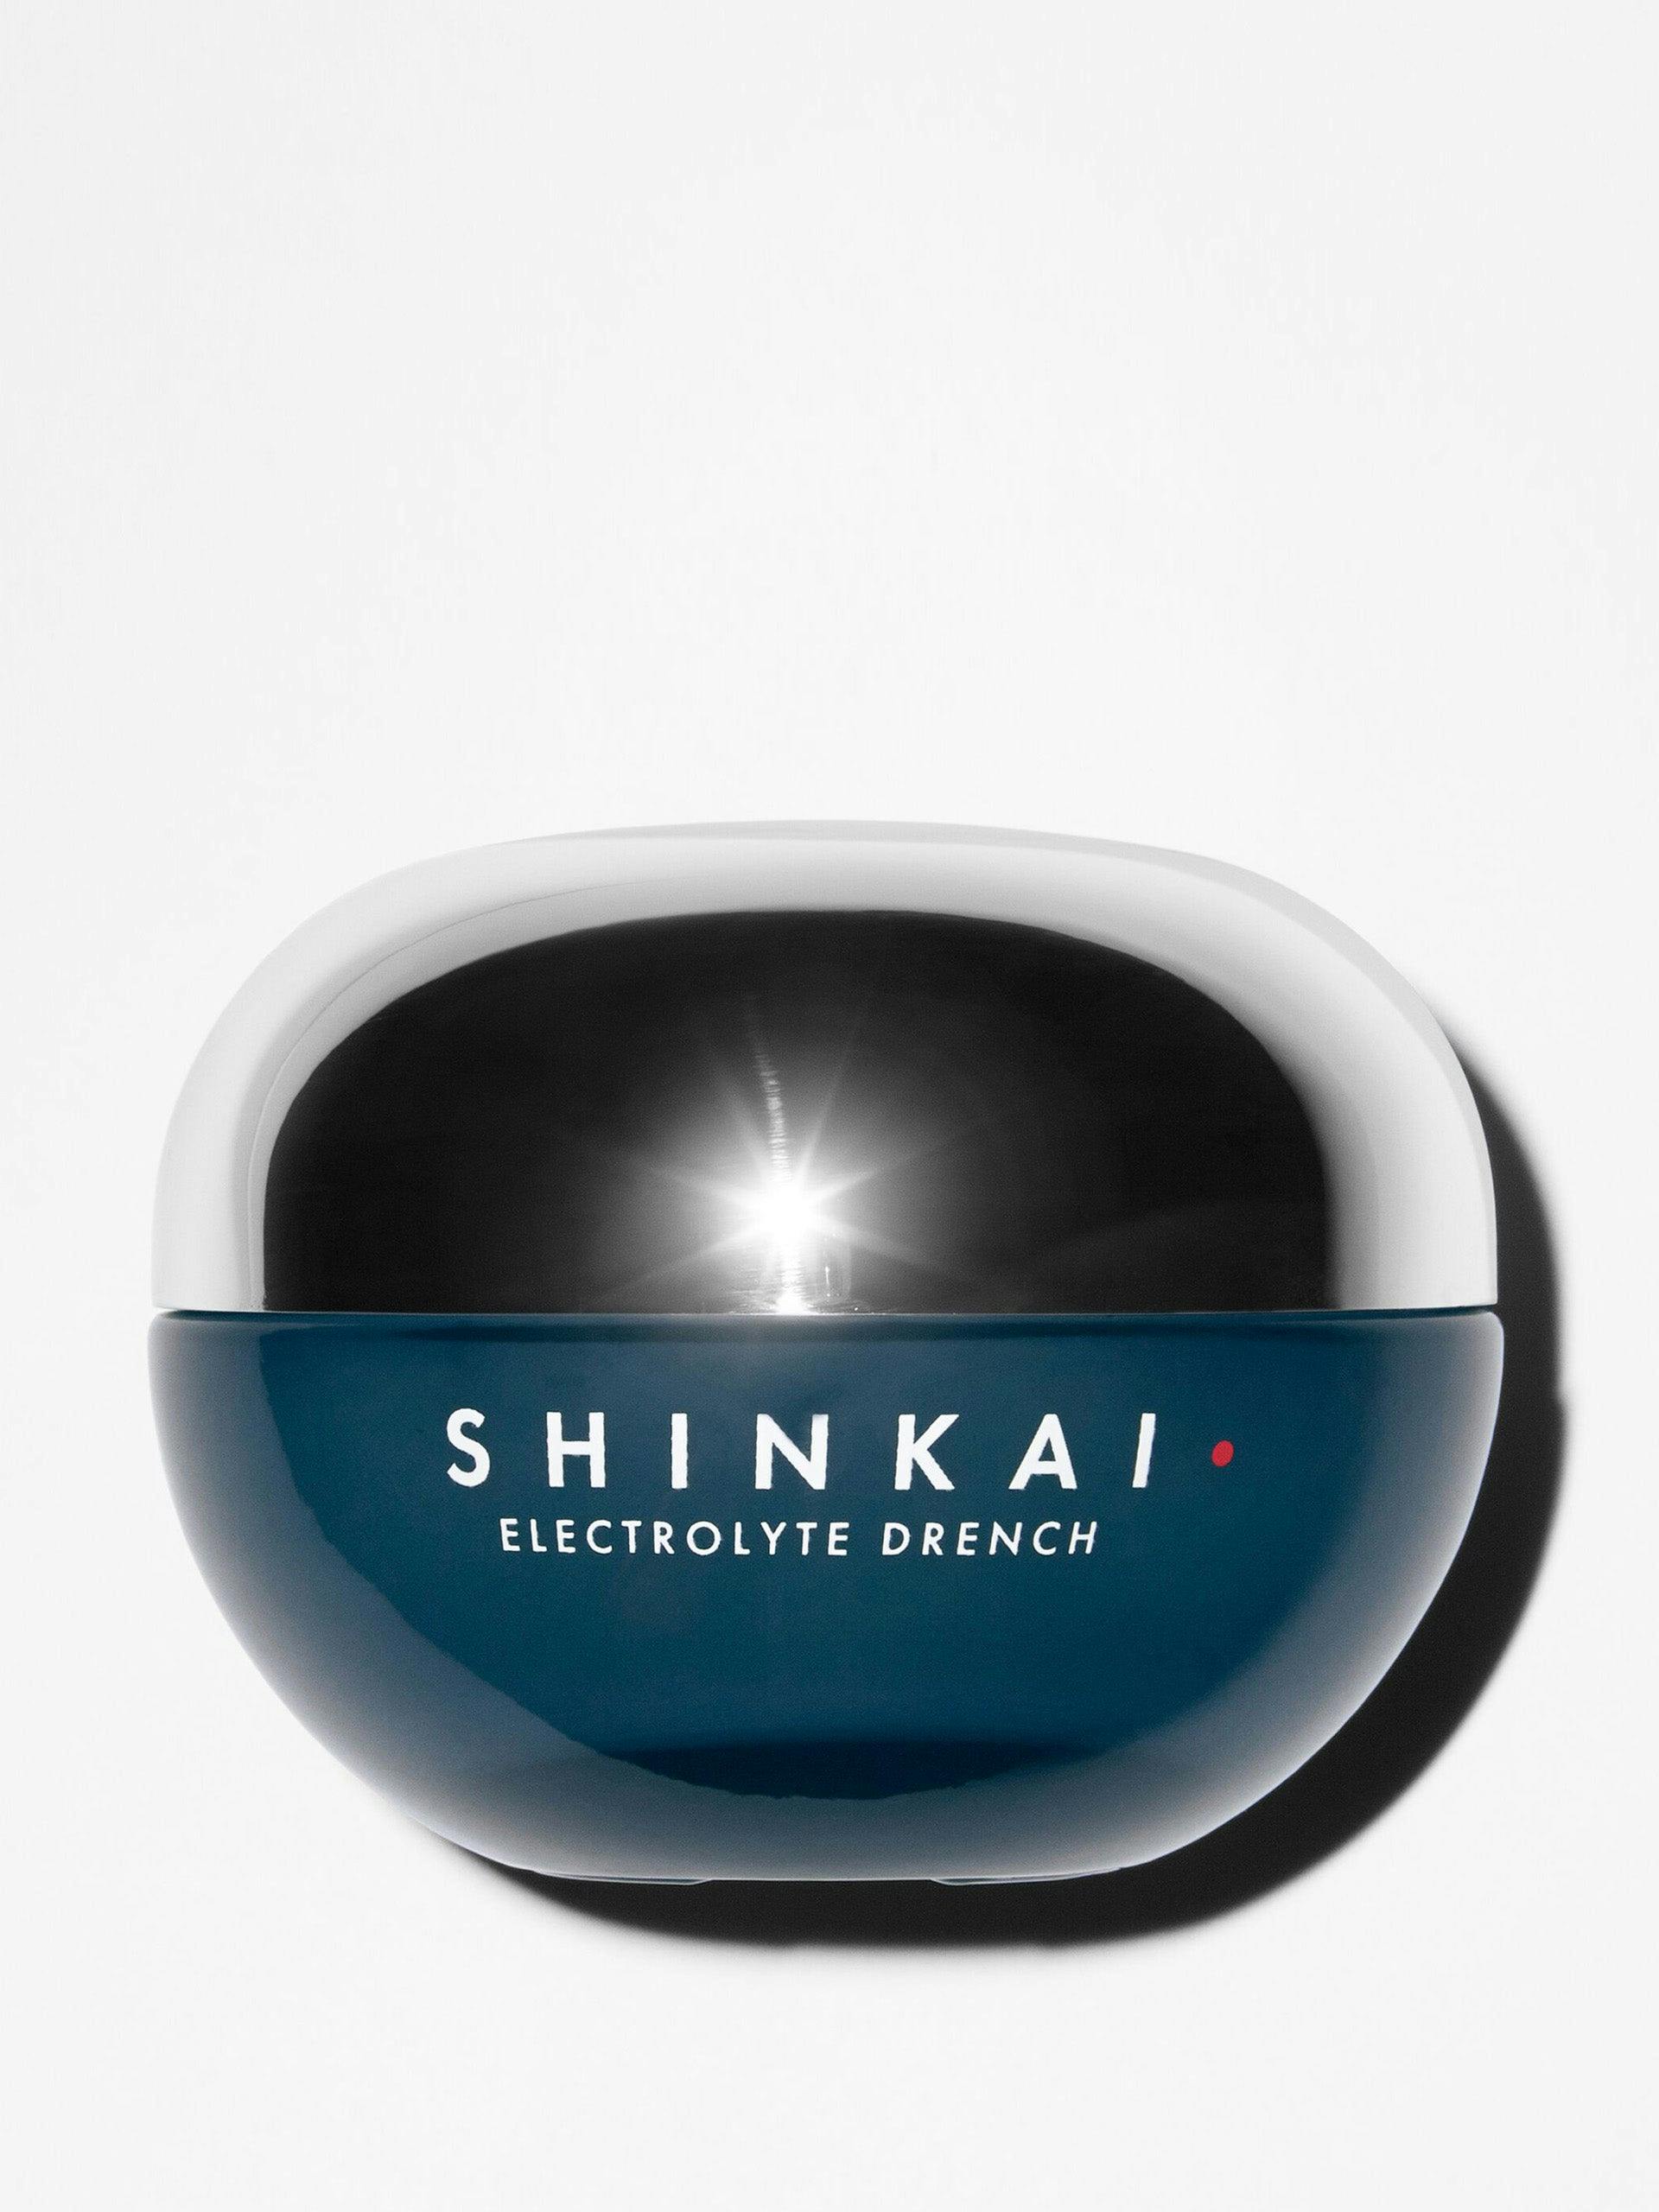 Shinkai Electrolyte Drench hydrating gel cream